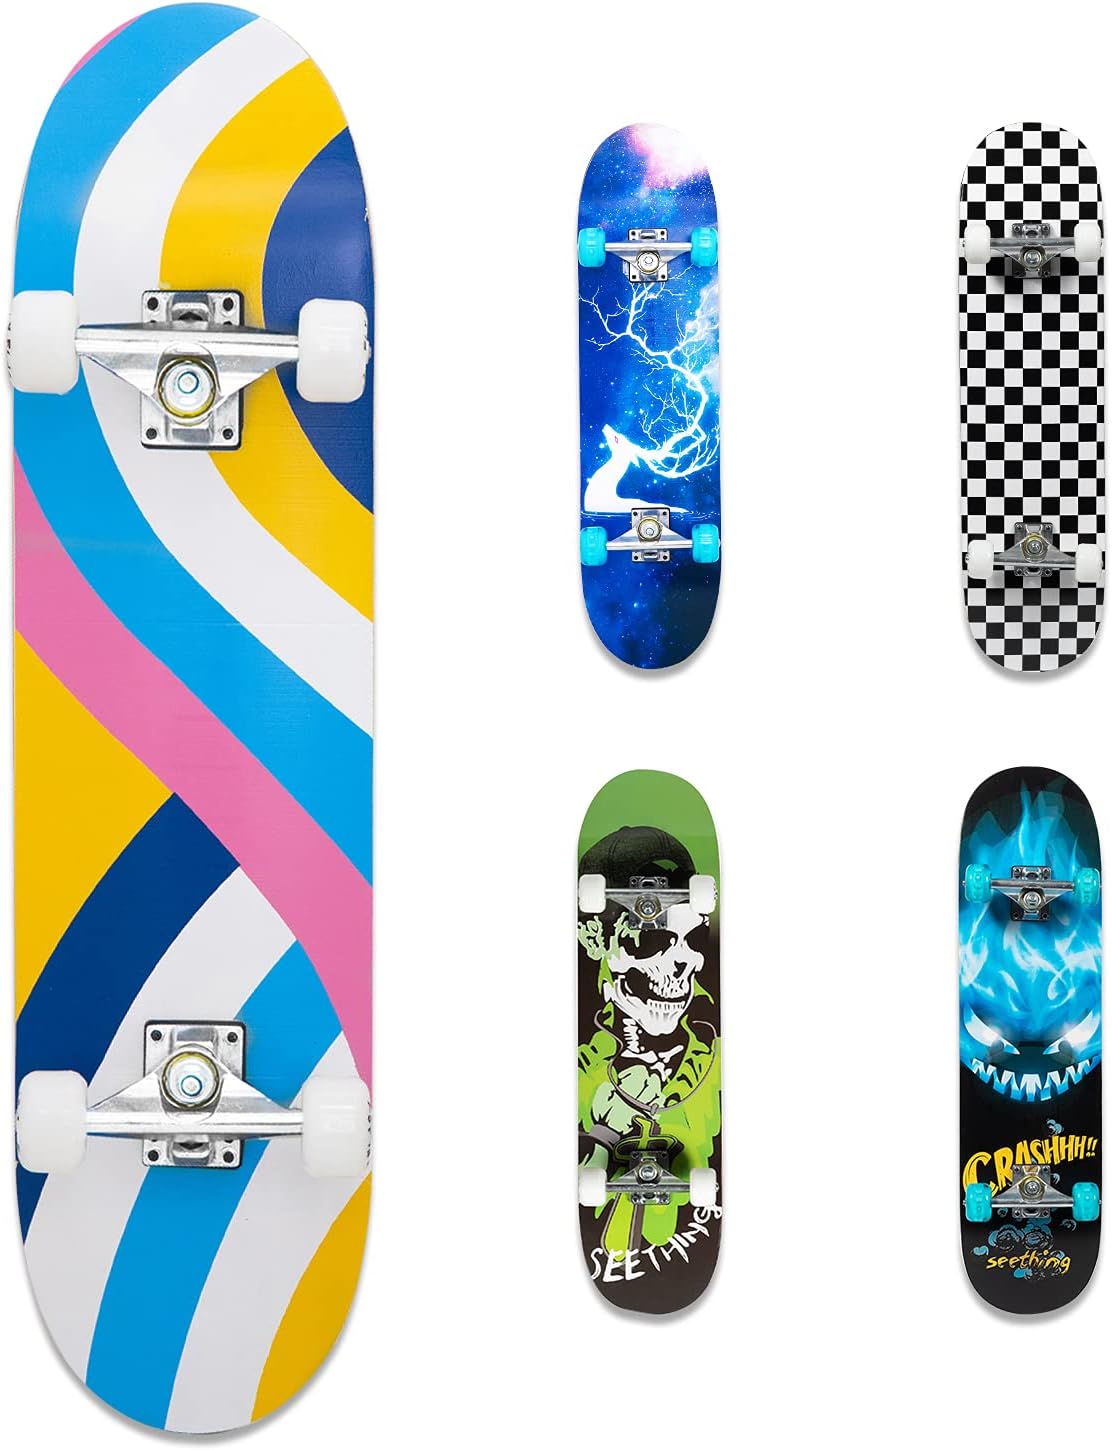 FlyFlash Skateboard, 31x 8 Complete Standard Skate Boards for Girls Boys Beginner, 9 Layer Maple Double Kick Deck Skateboards for Kids Youth Teens